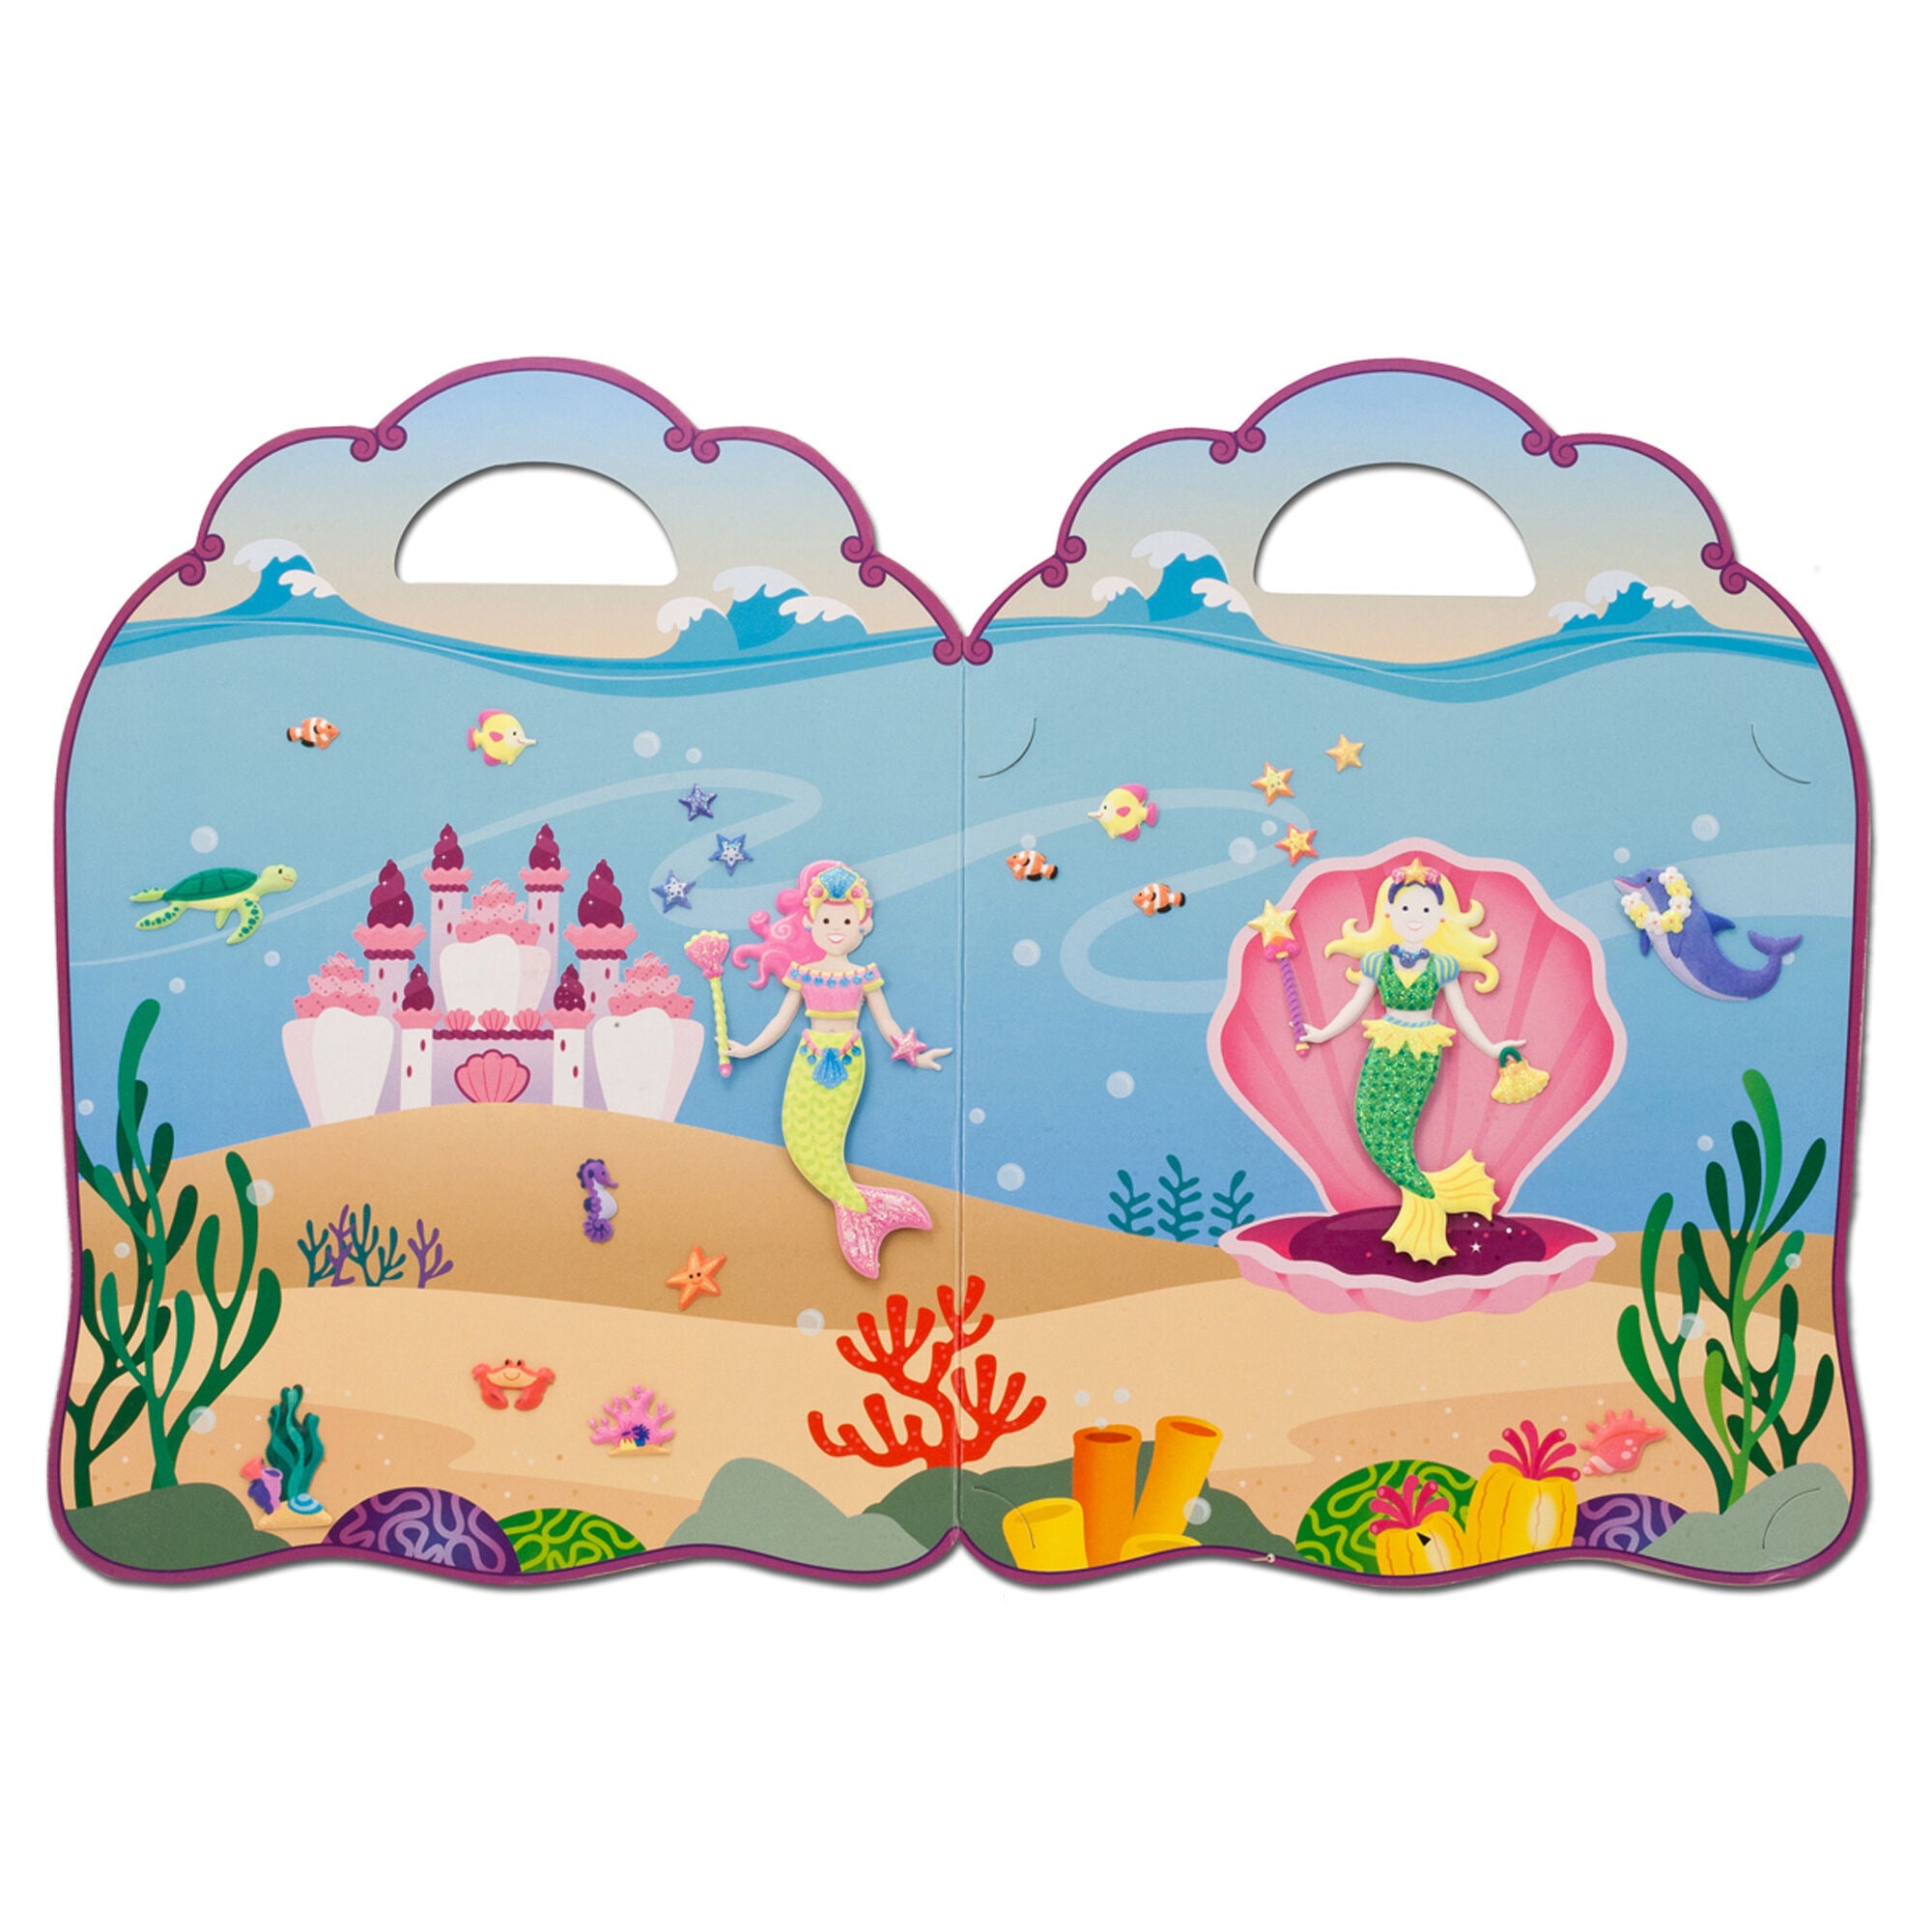 Puffy Sticker: Mermaids by Melissa & Doug #9413